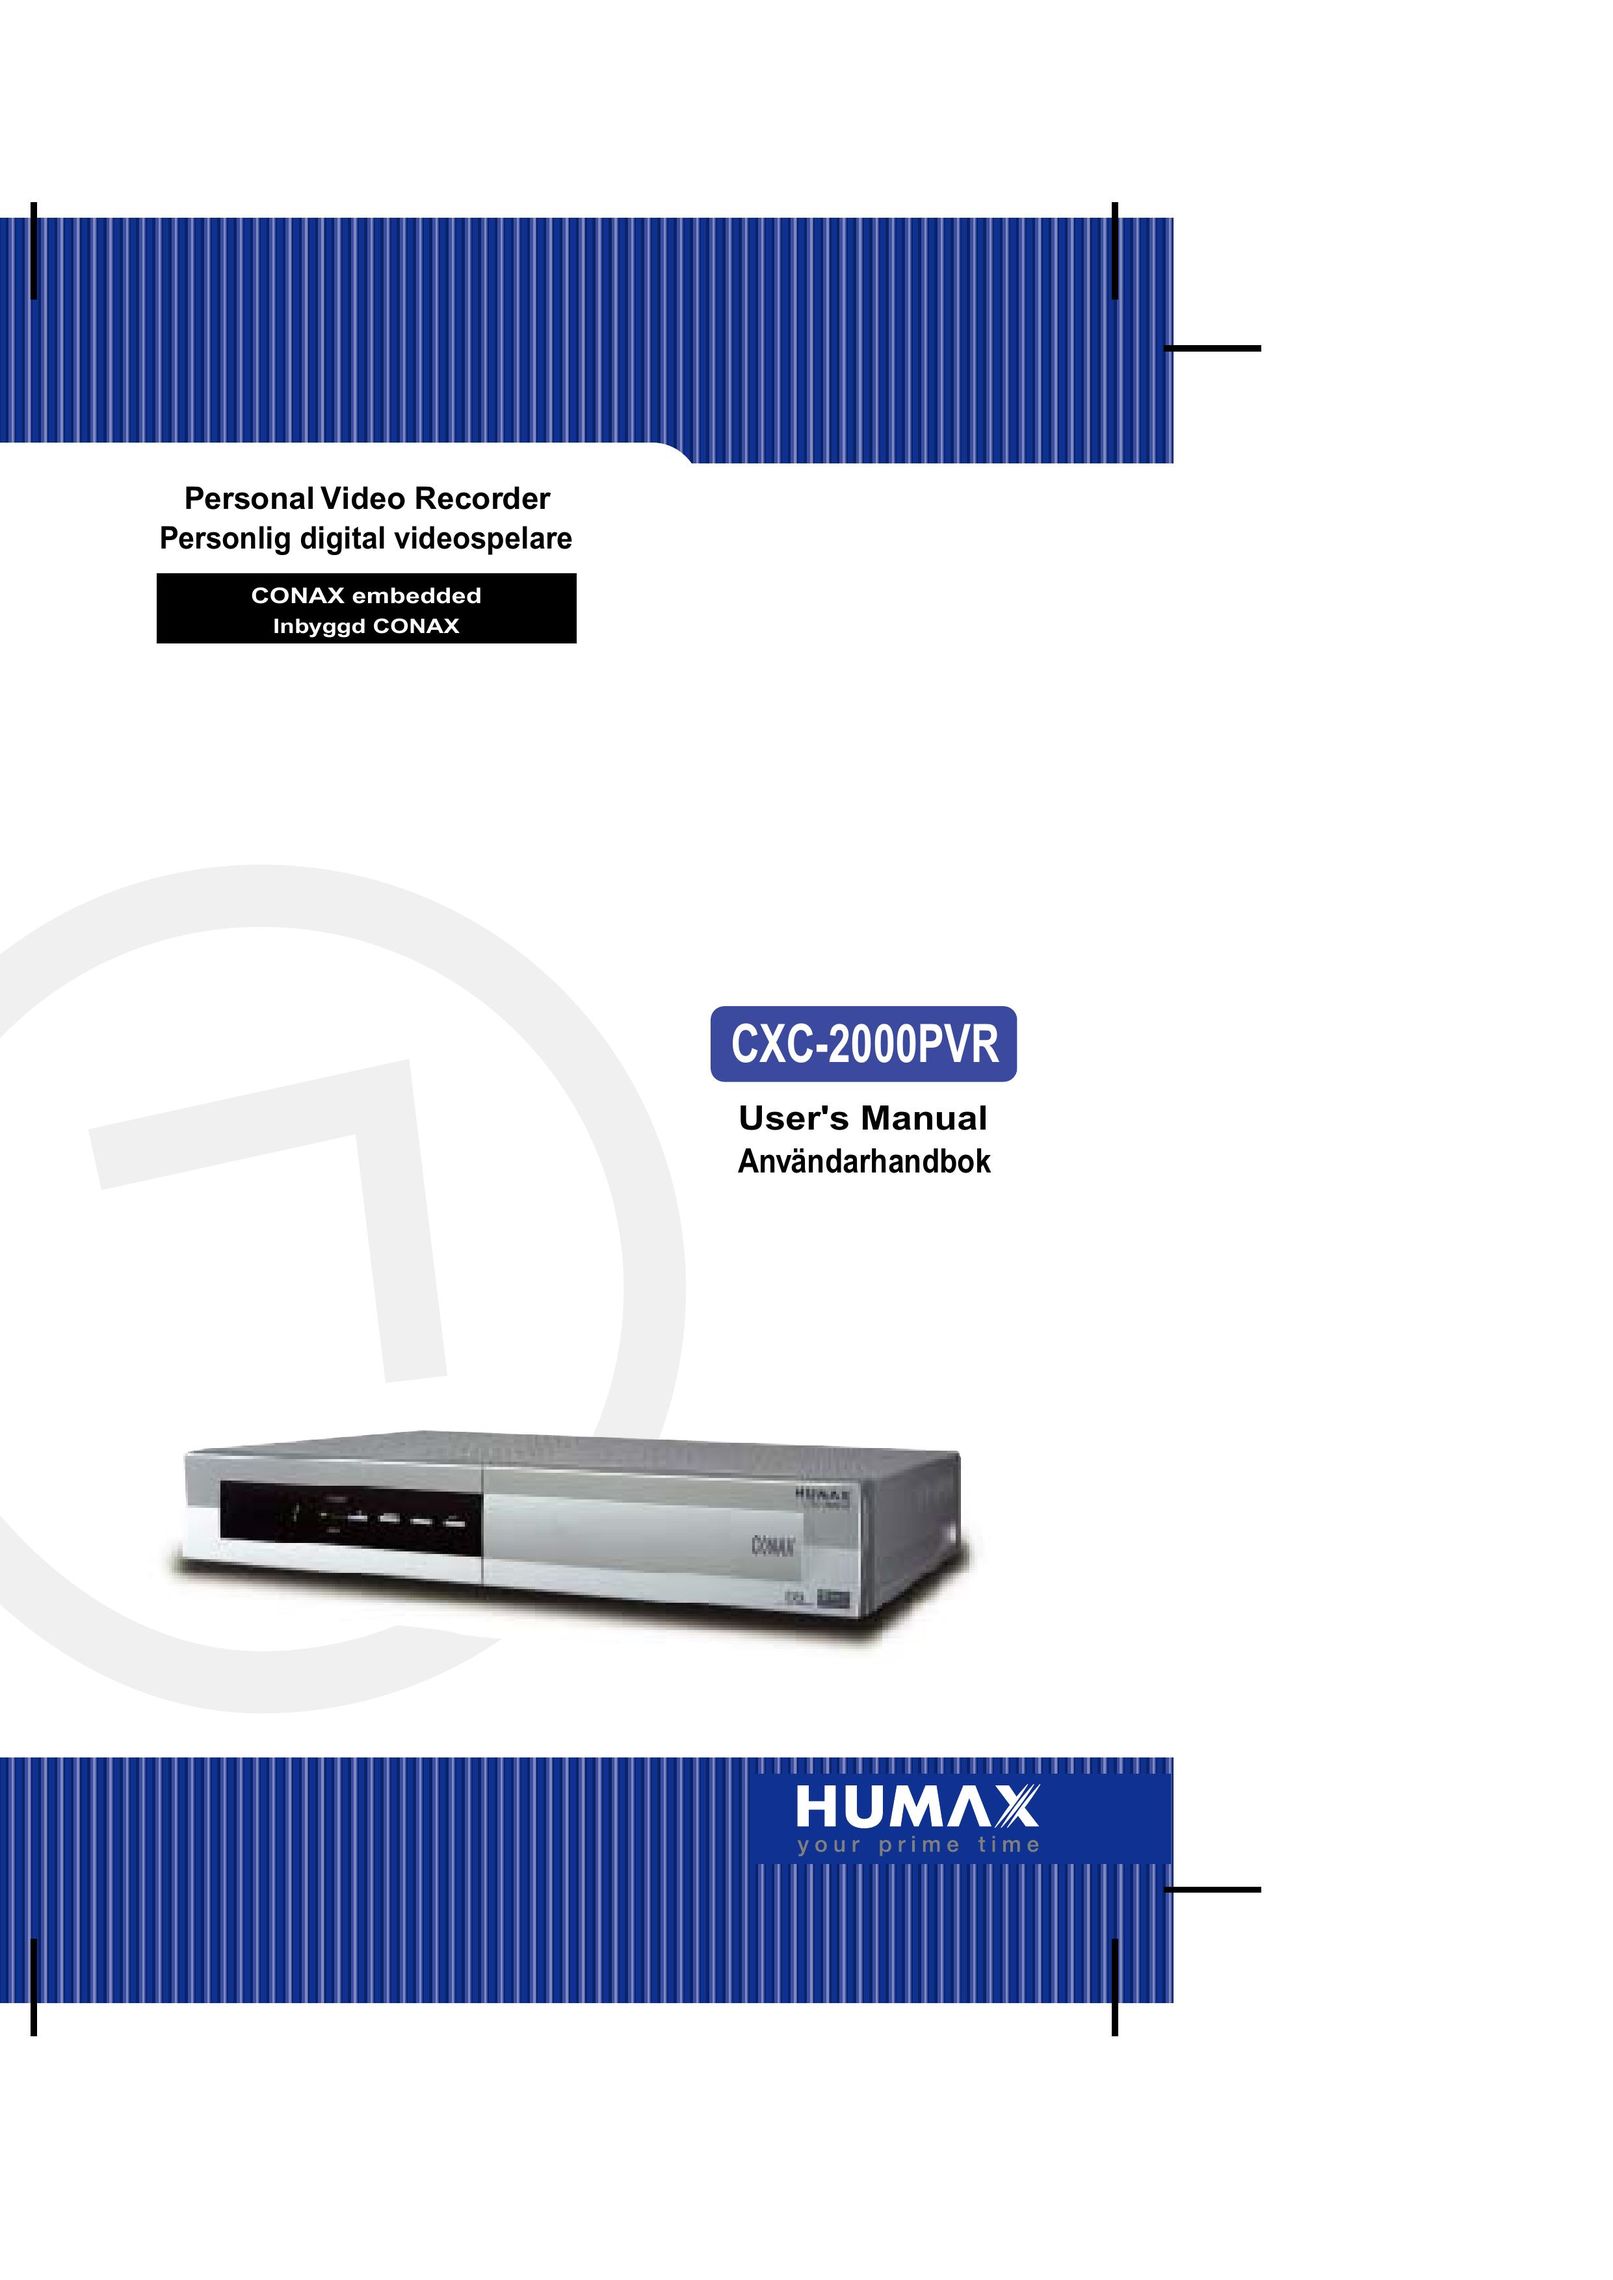 Humax CXC-2000PVR DVR User Manual